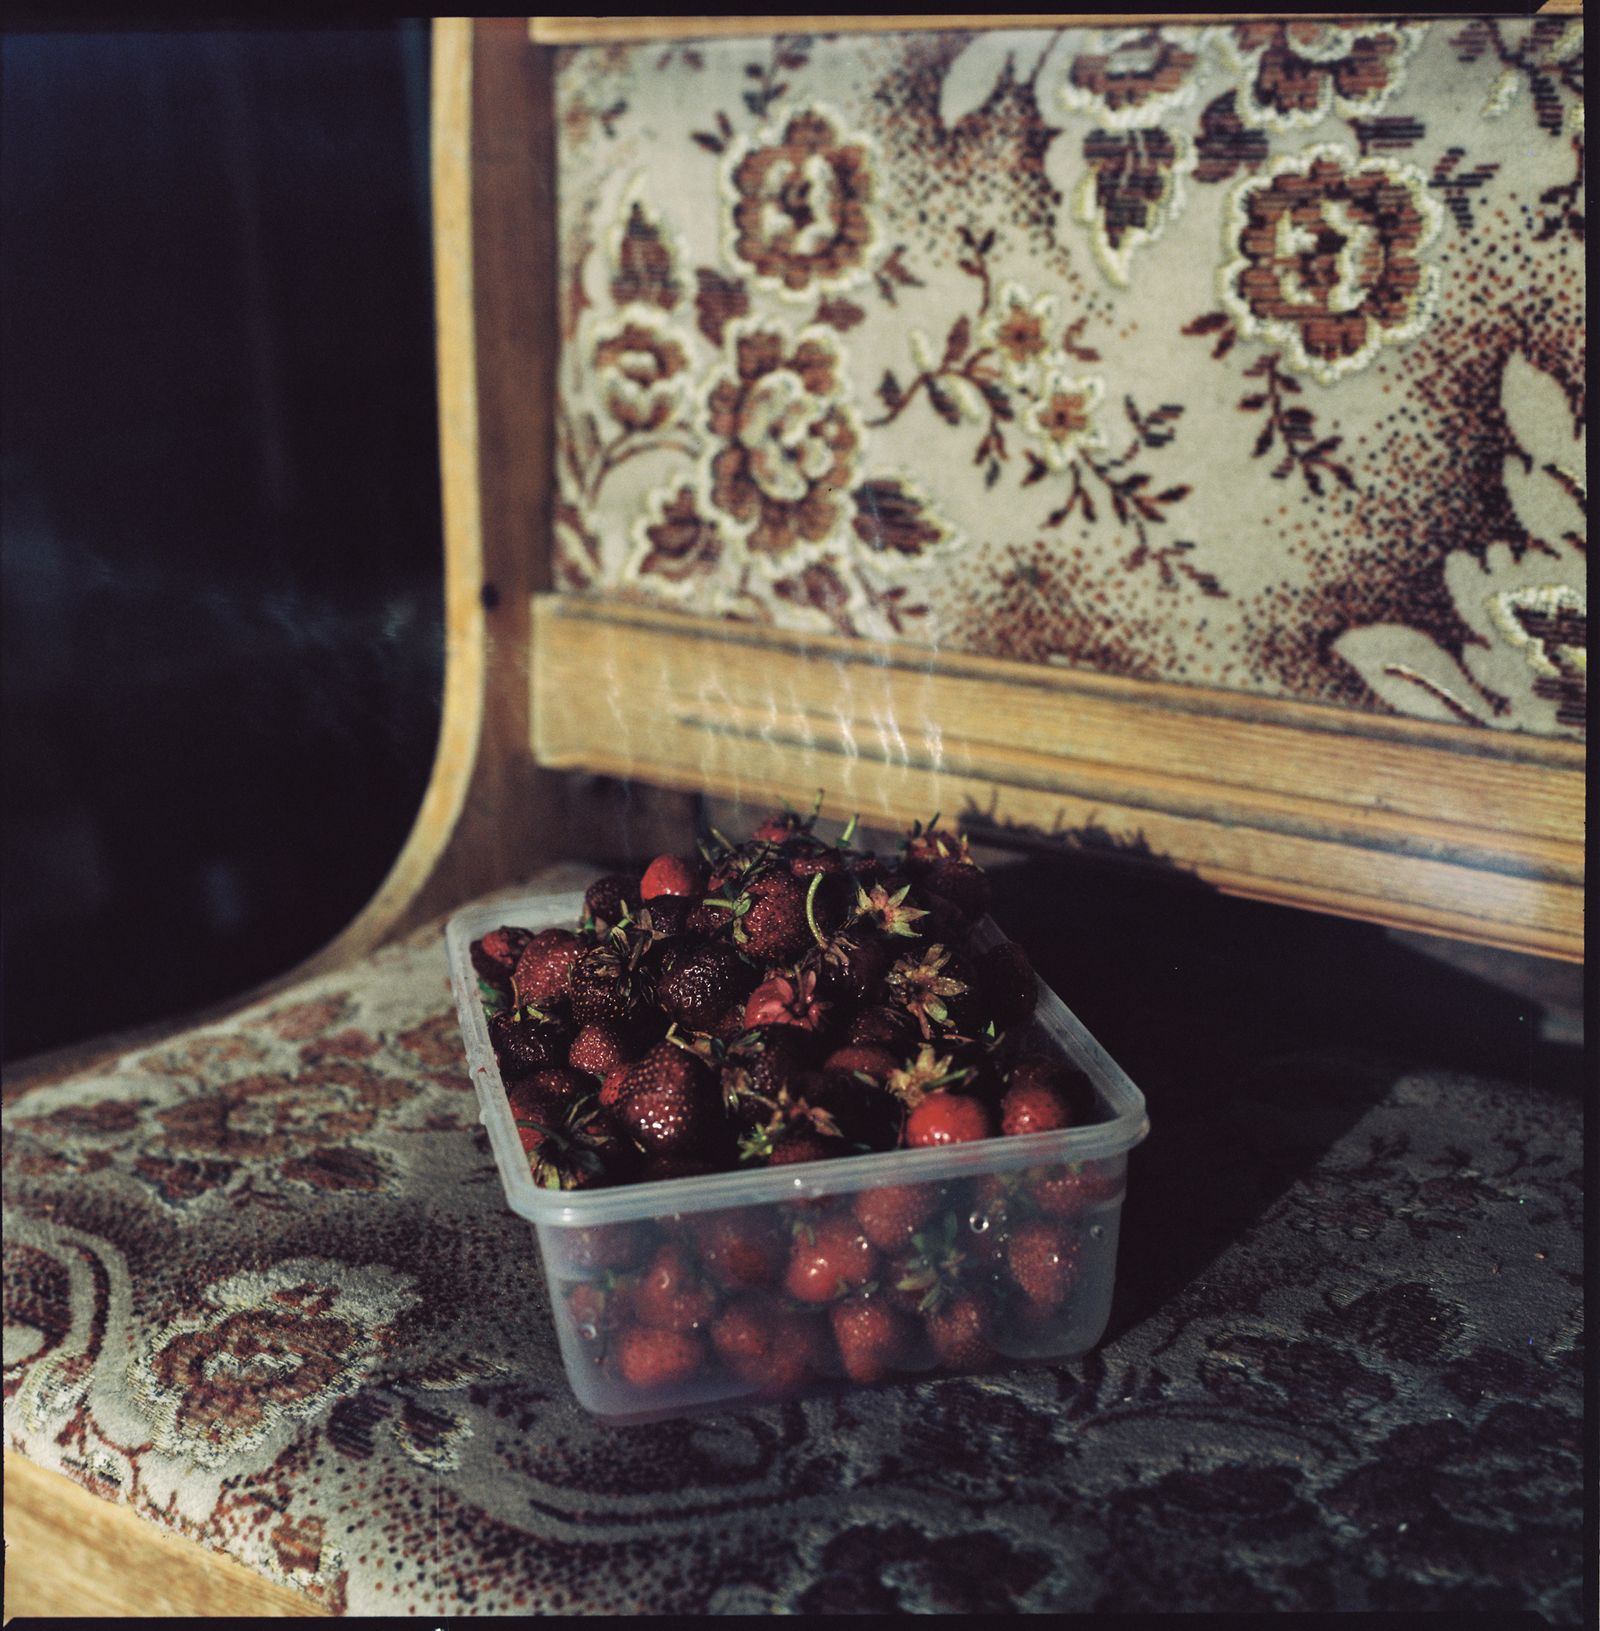 © Zula Rabikowska - Hand picked strawberries, Gdansk, Poland